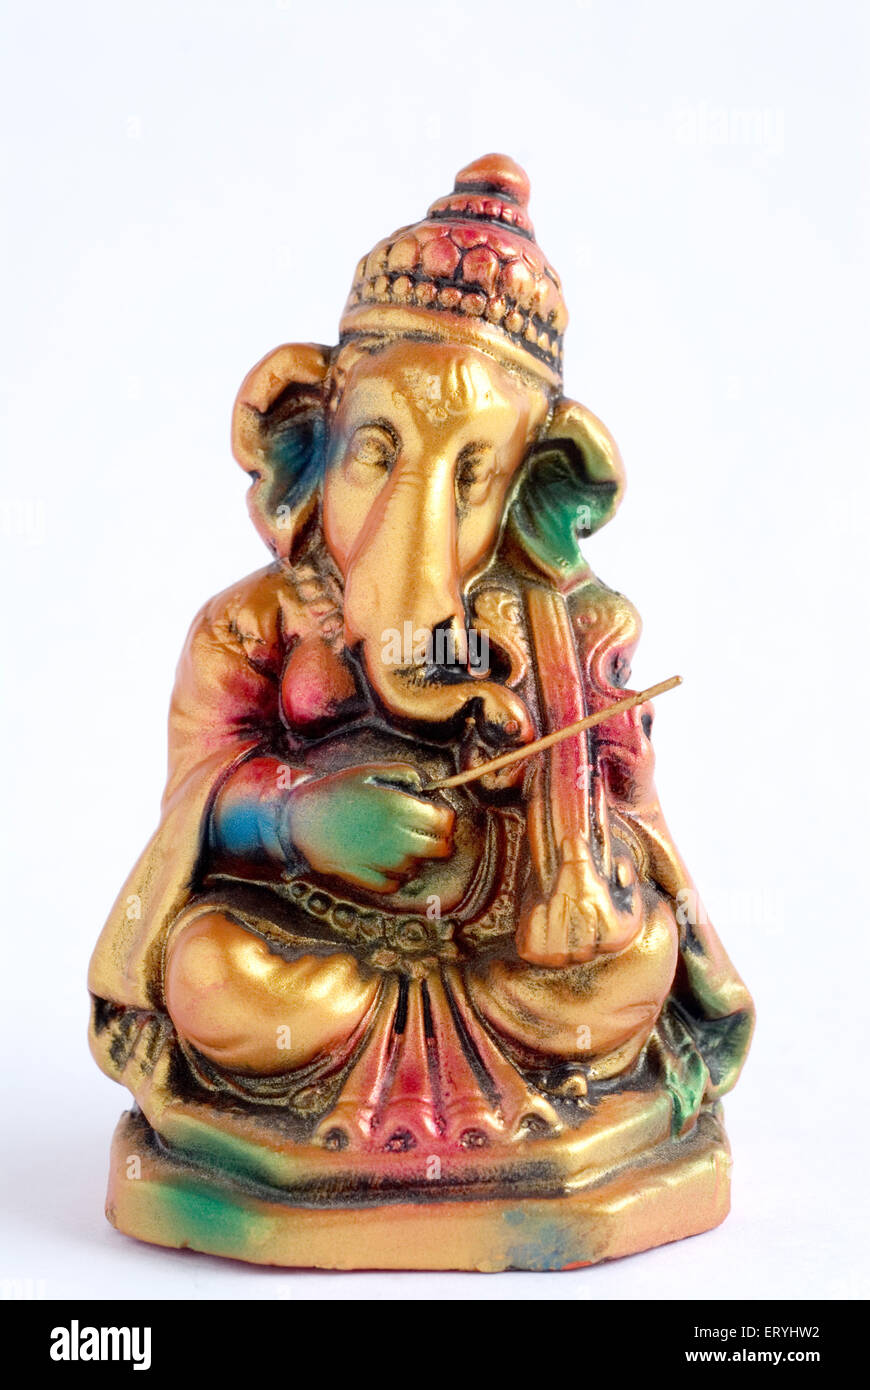 Colourful statue of lord Ganesha elephant headed god playing violin ; India Stock Photo